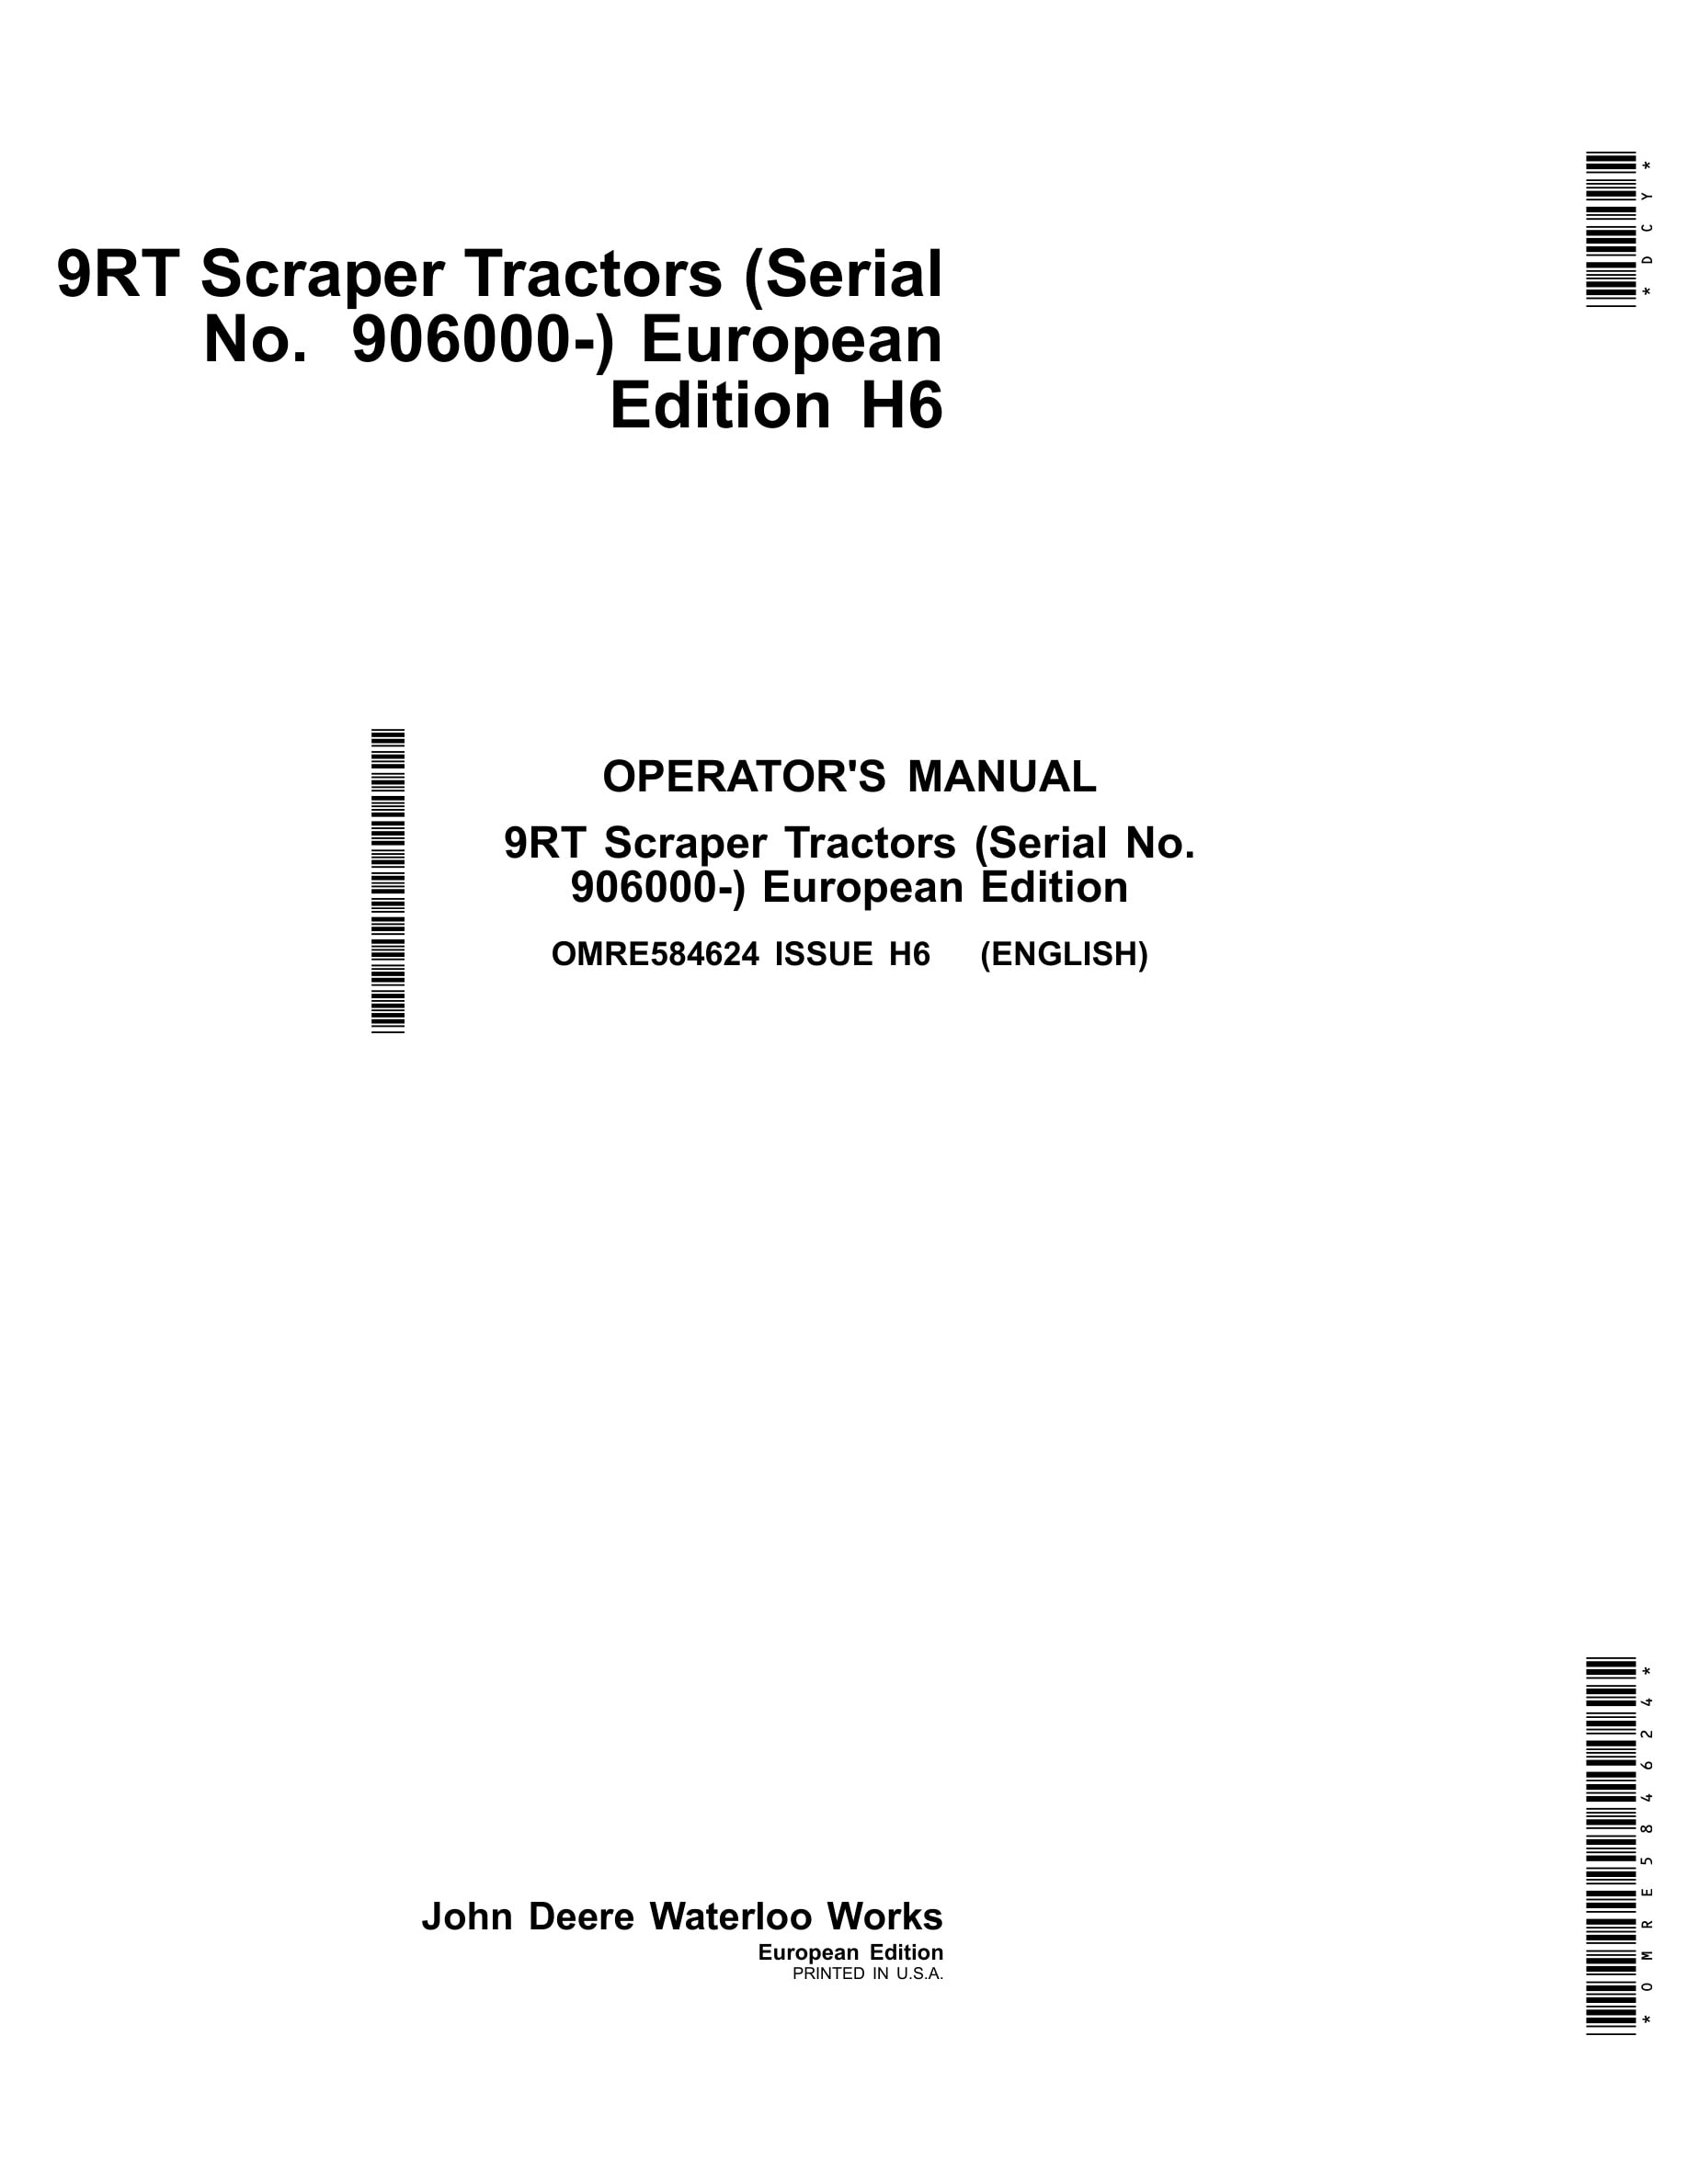 John Deere 9rt Scraper Tractors Operator Manuals OMRE584624-1